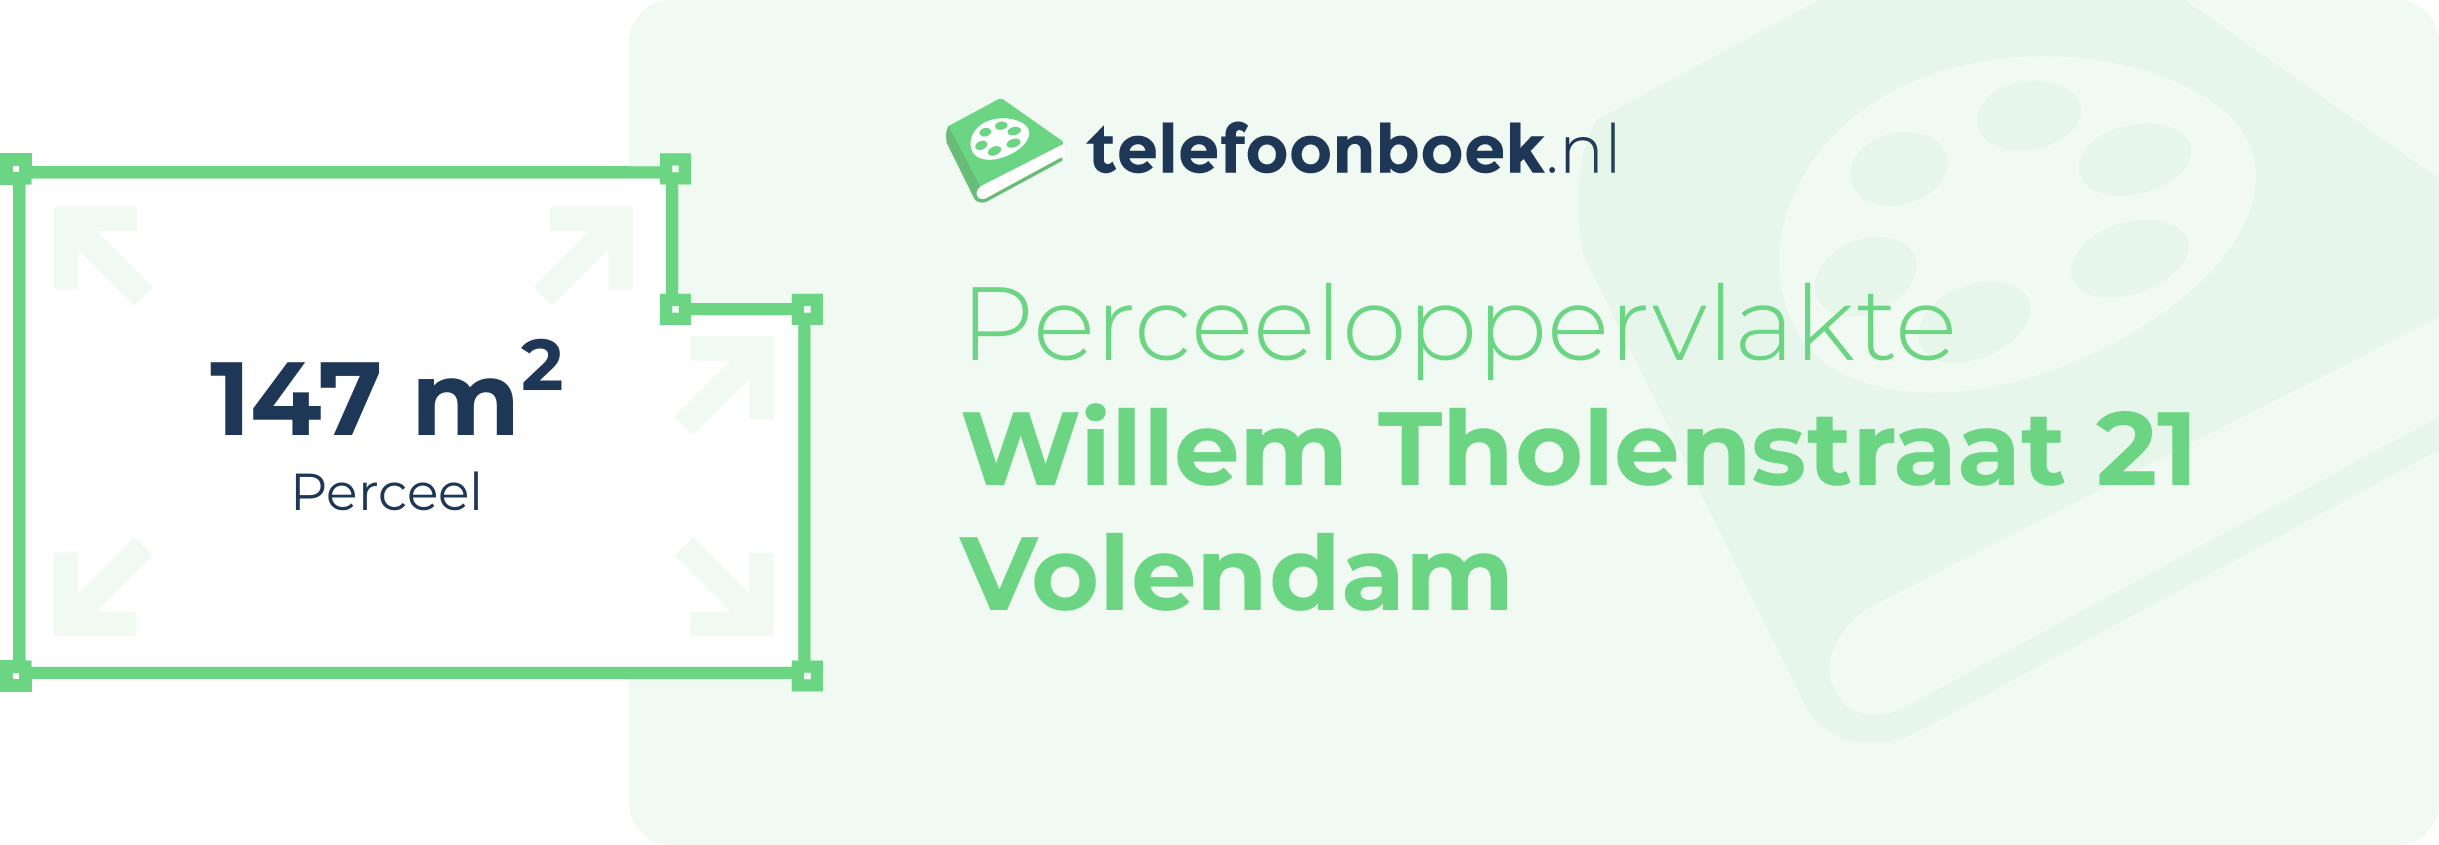 Perceeloppervlakte Willem Tholenstraat 21 Volendam